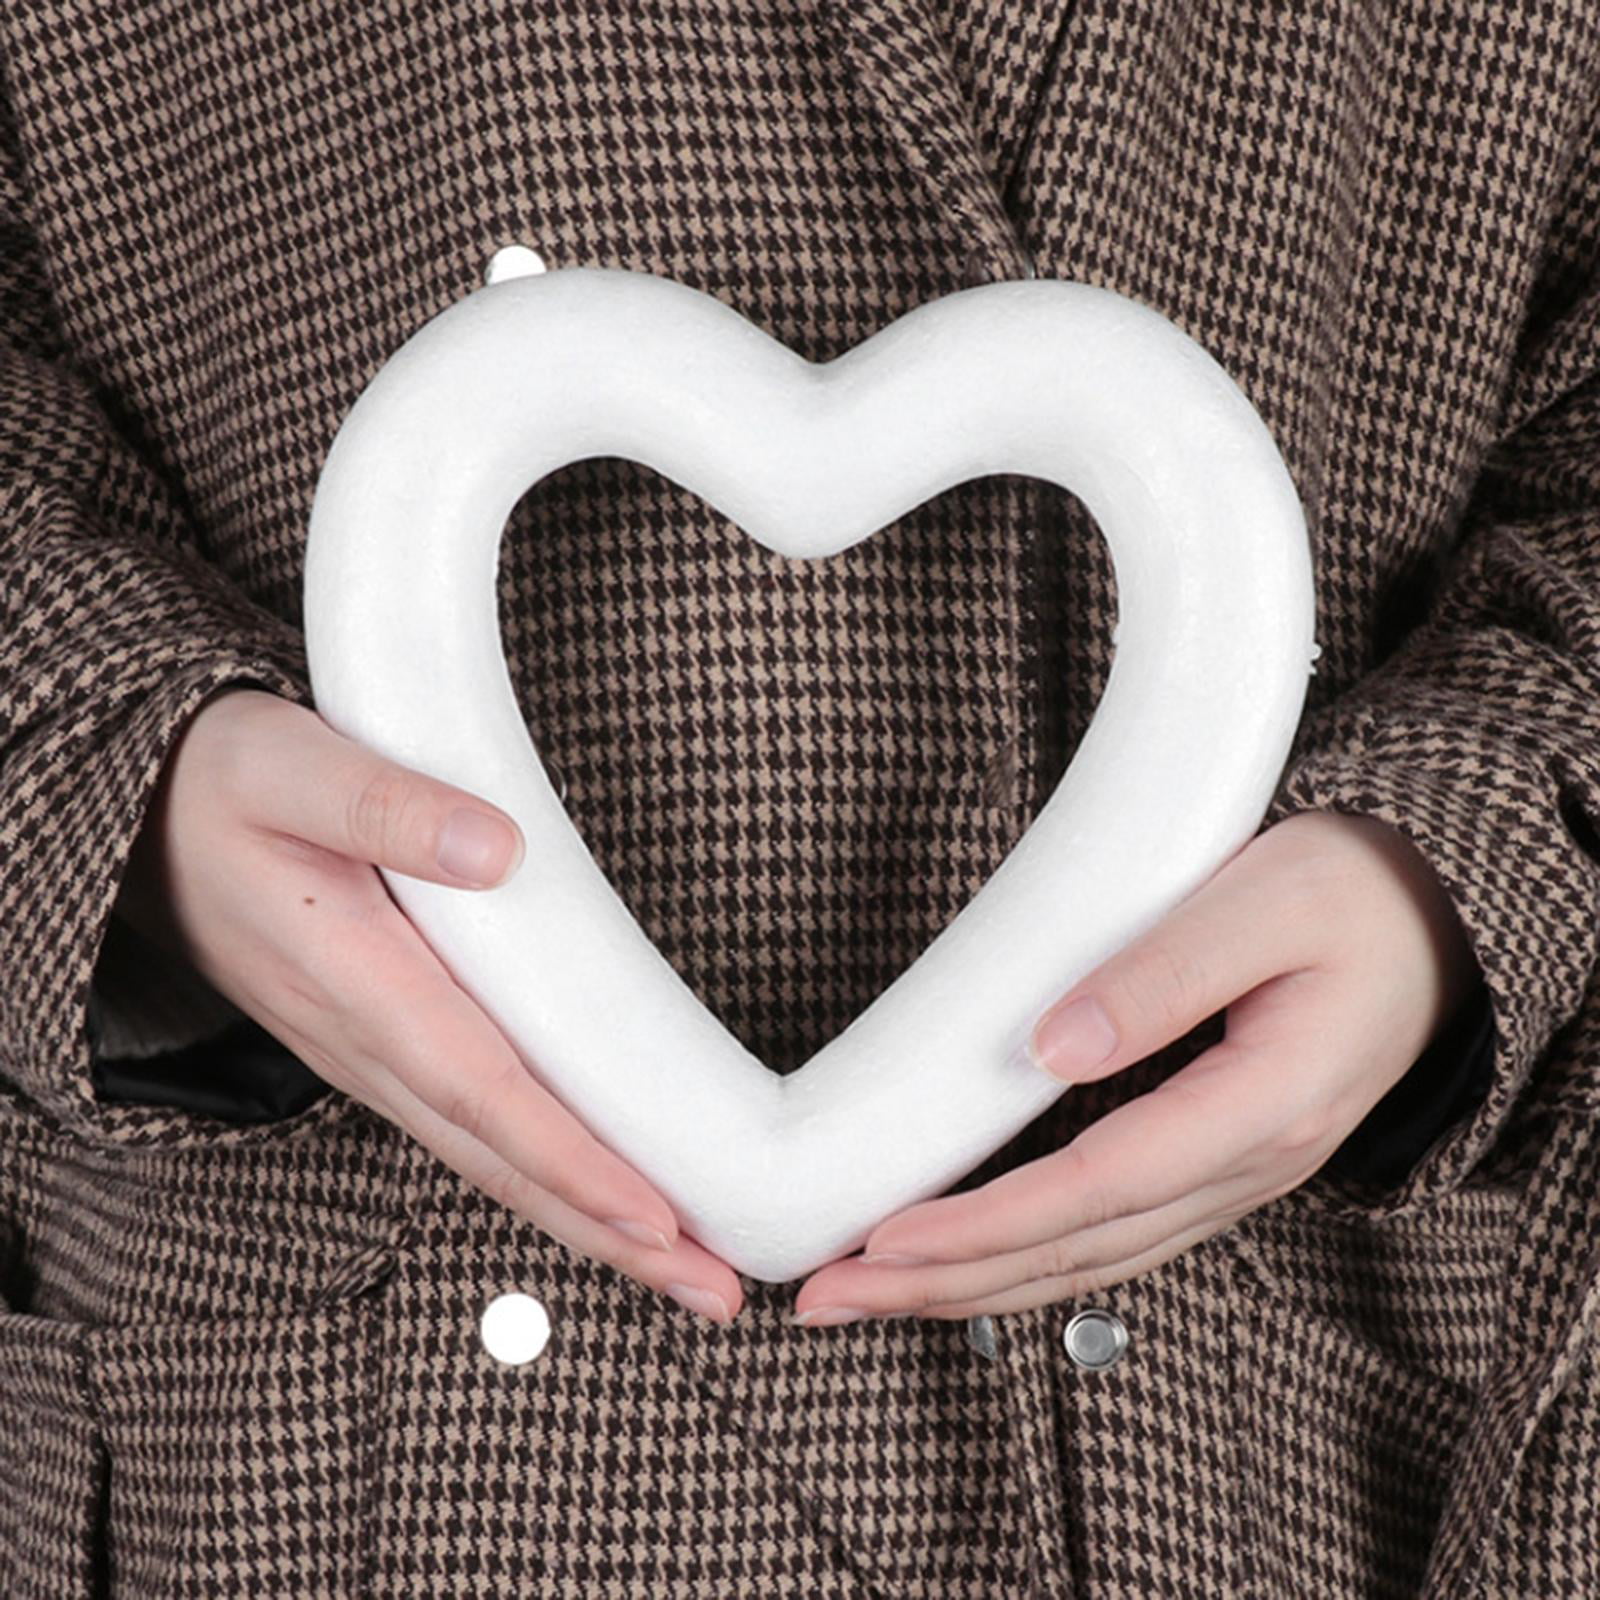 Balls Heart Styrofoam Hearts Craft Shapes Diy Polystyrene Day Shaped Crafts  Supplies Arranging Wedding Bauble Flower 